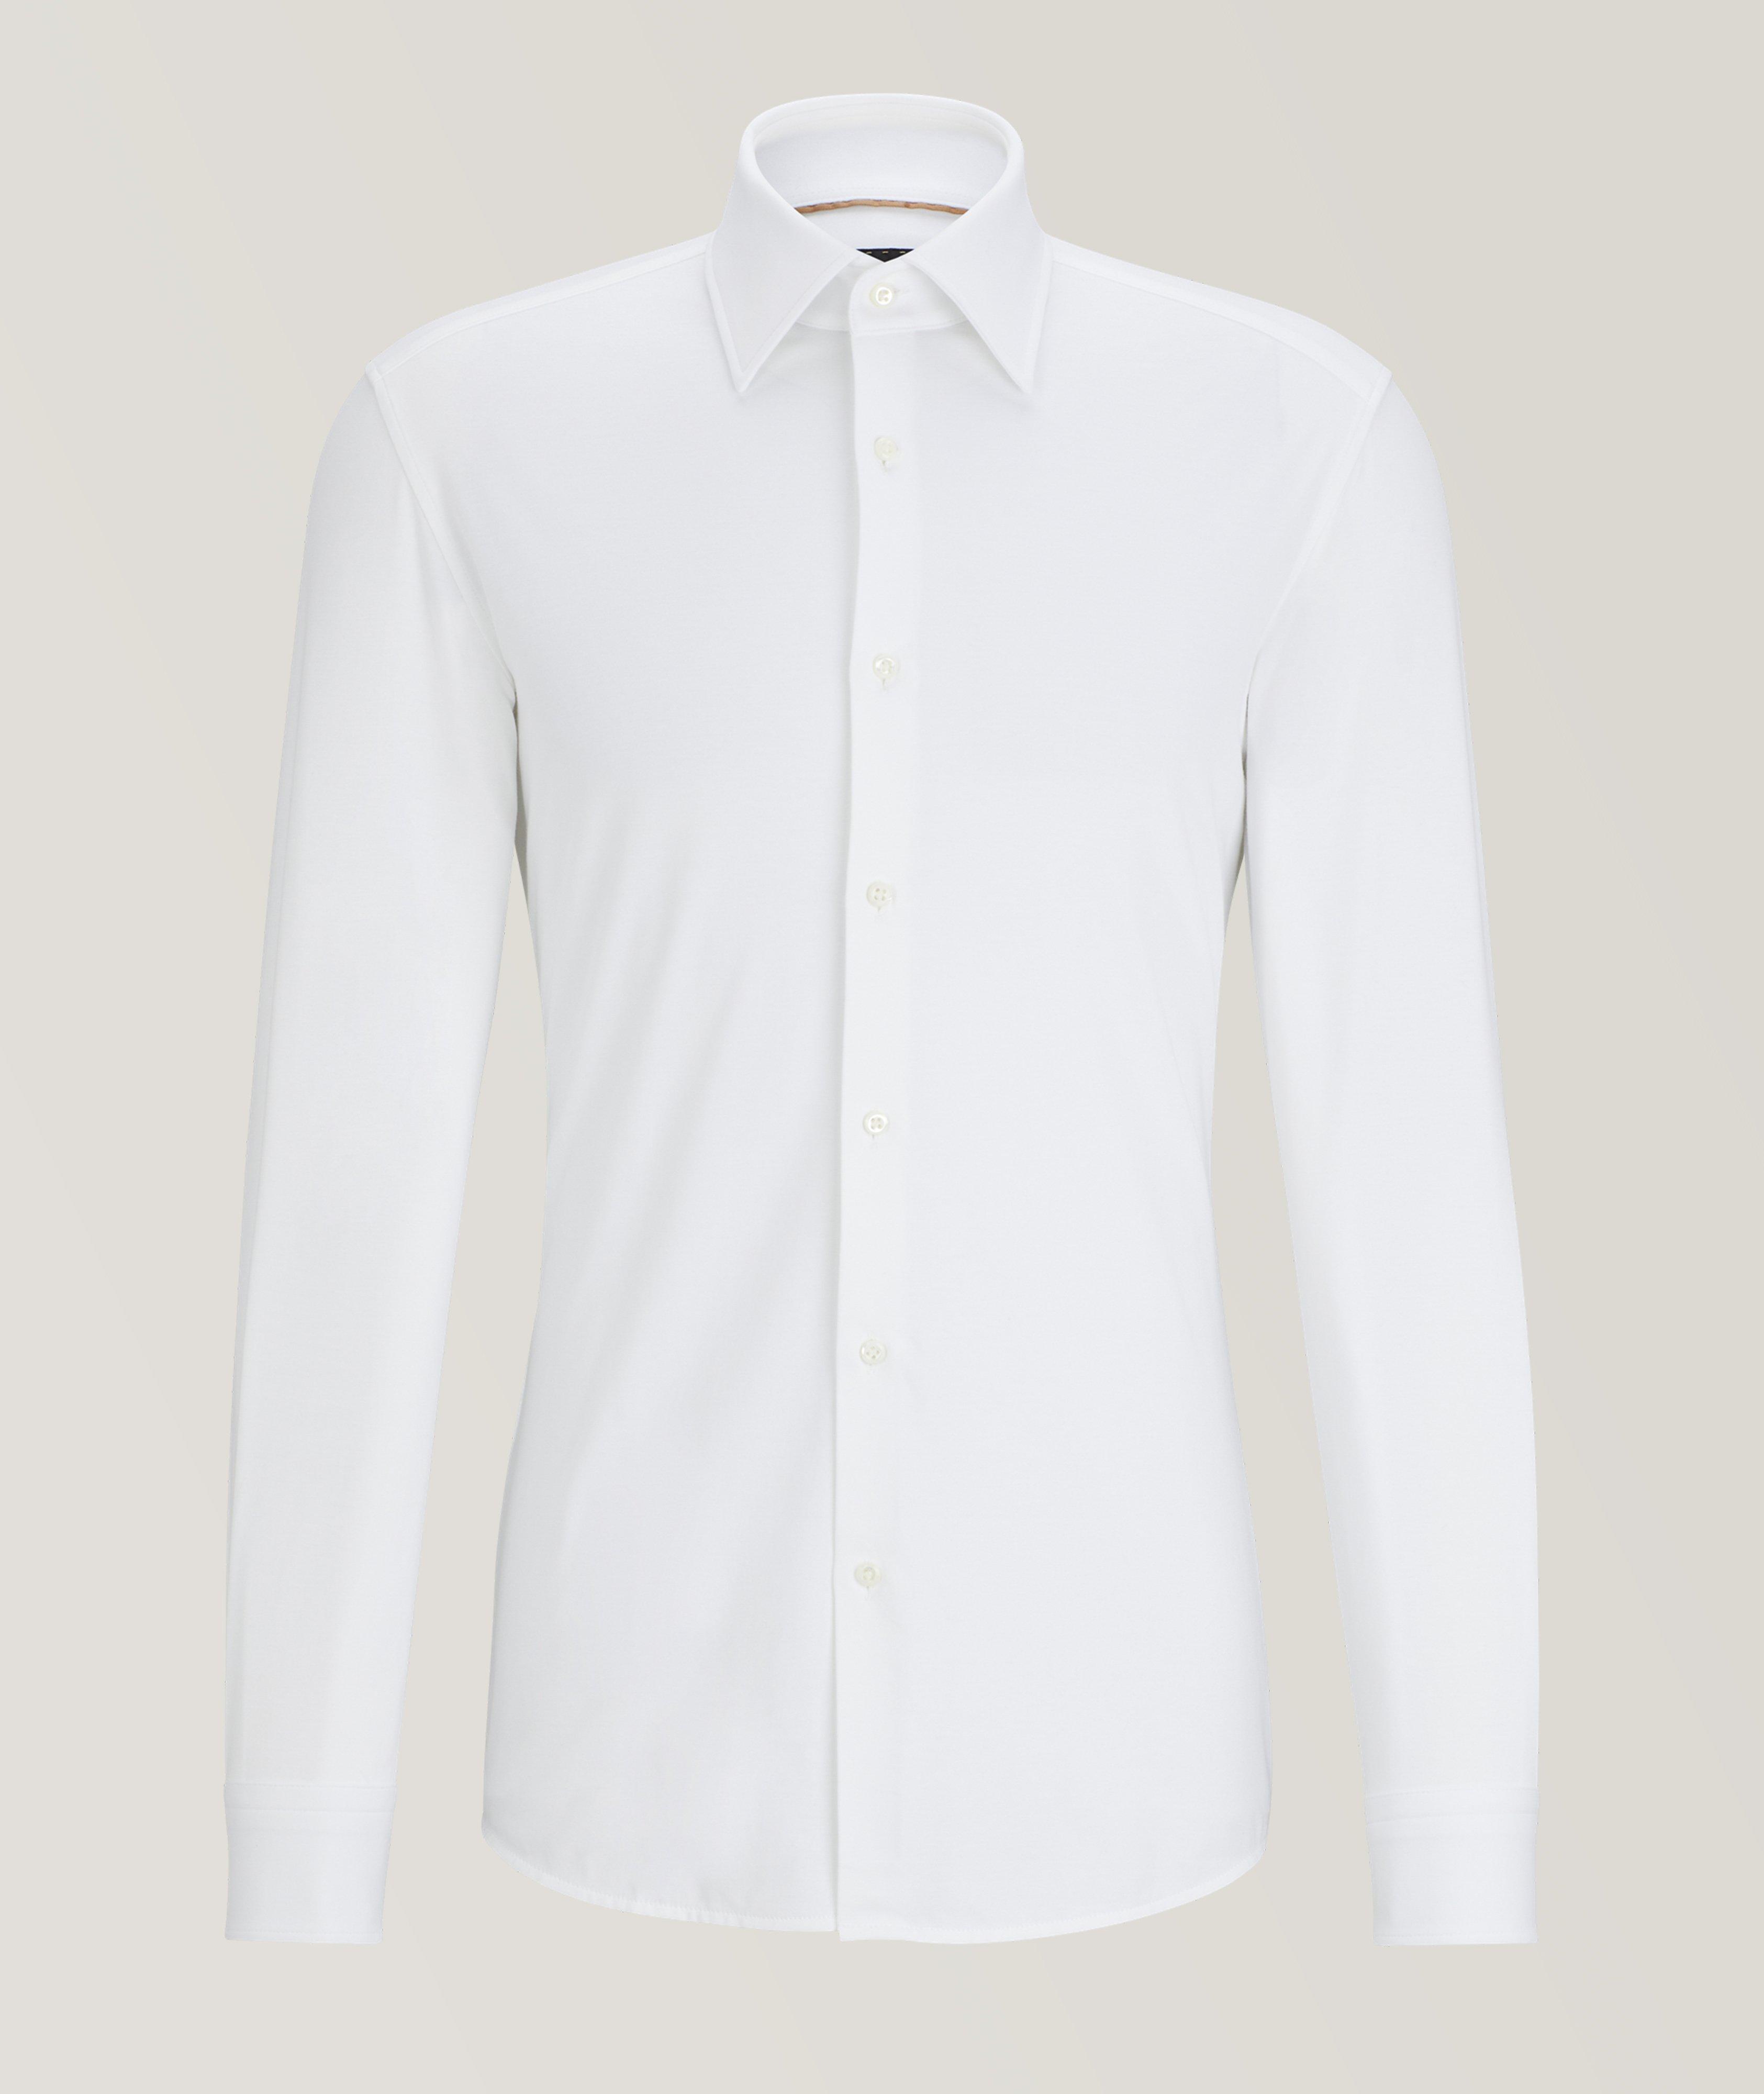 Structured Stretch Cotton-Blend Dress Shirt image 0